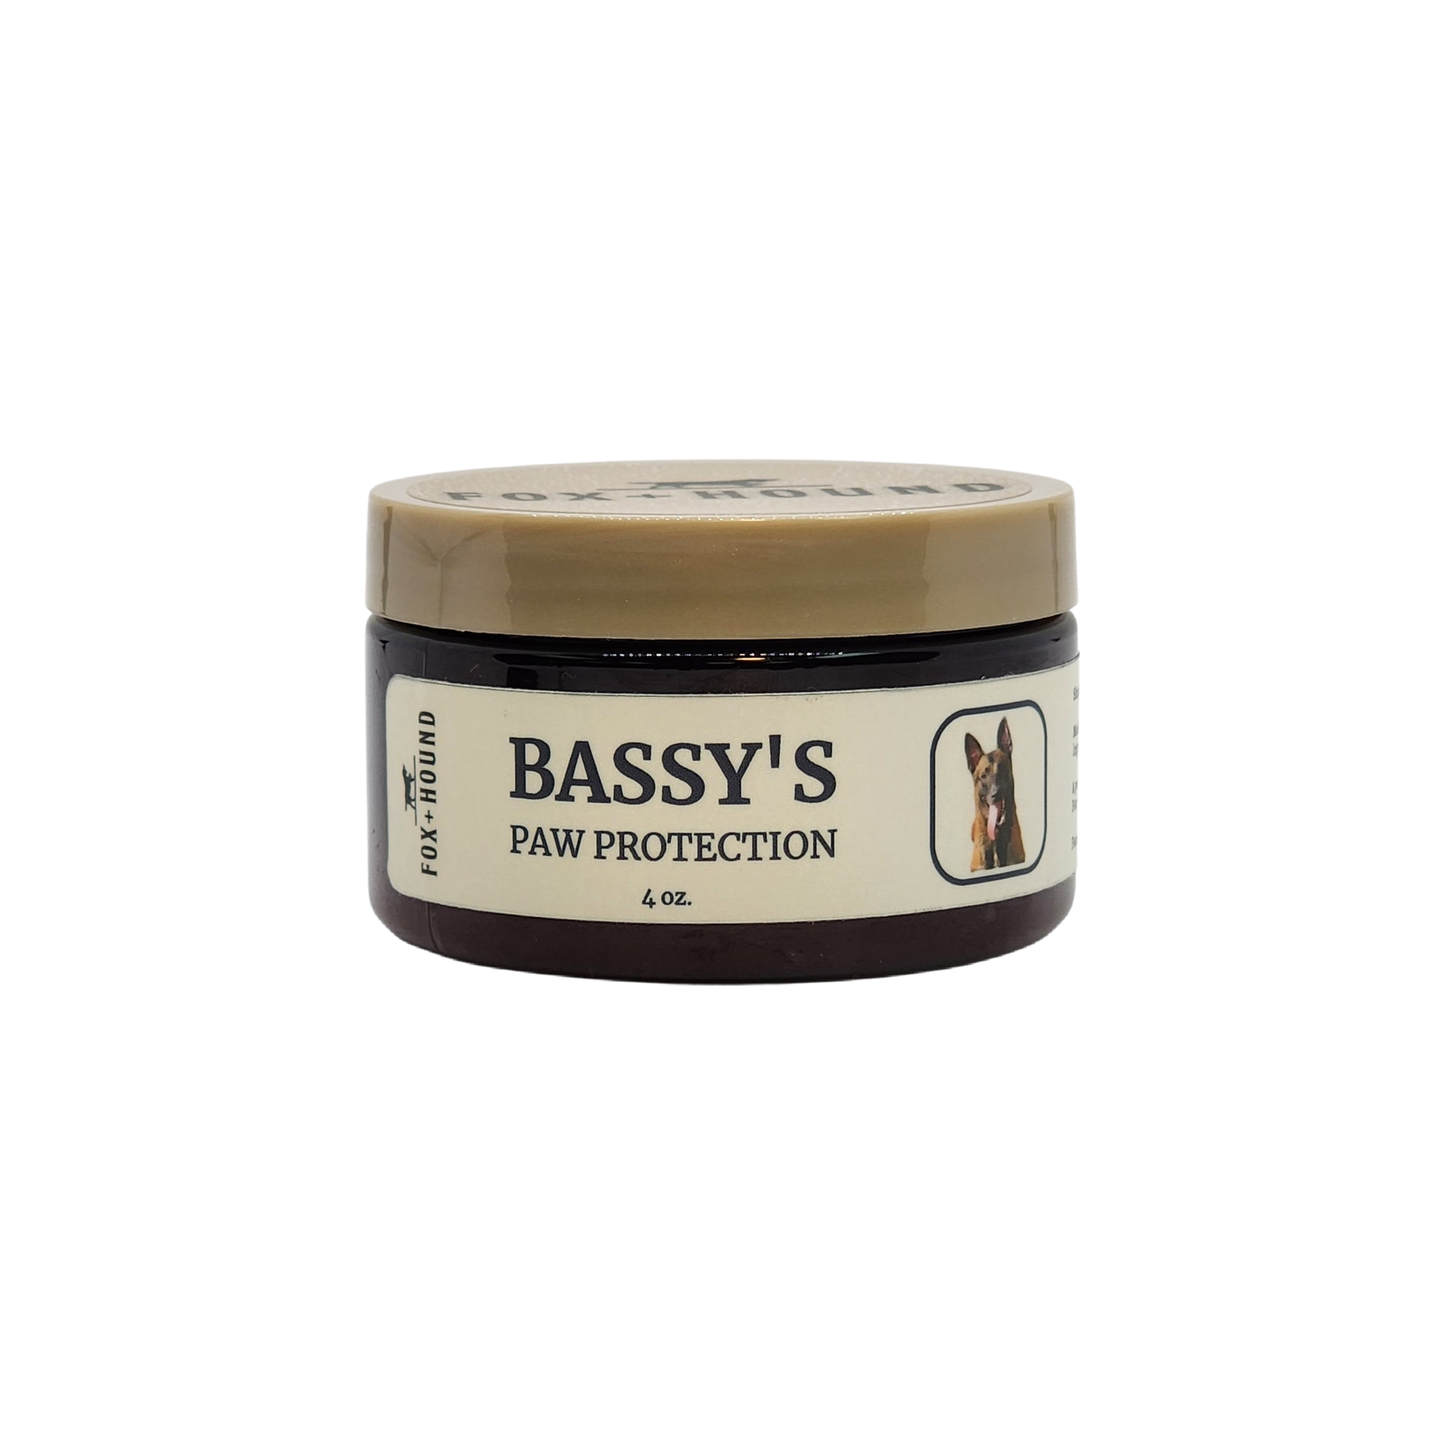 Bassy's All Seasons Paw Pad Protection